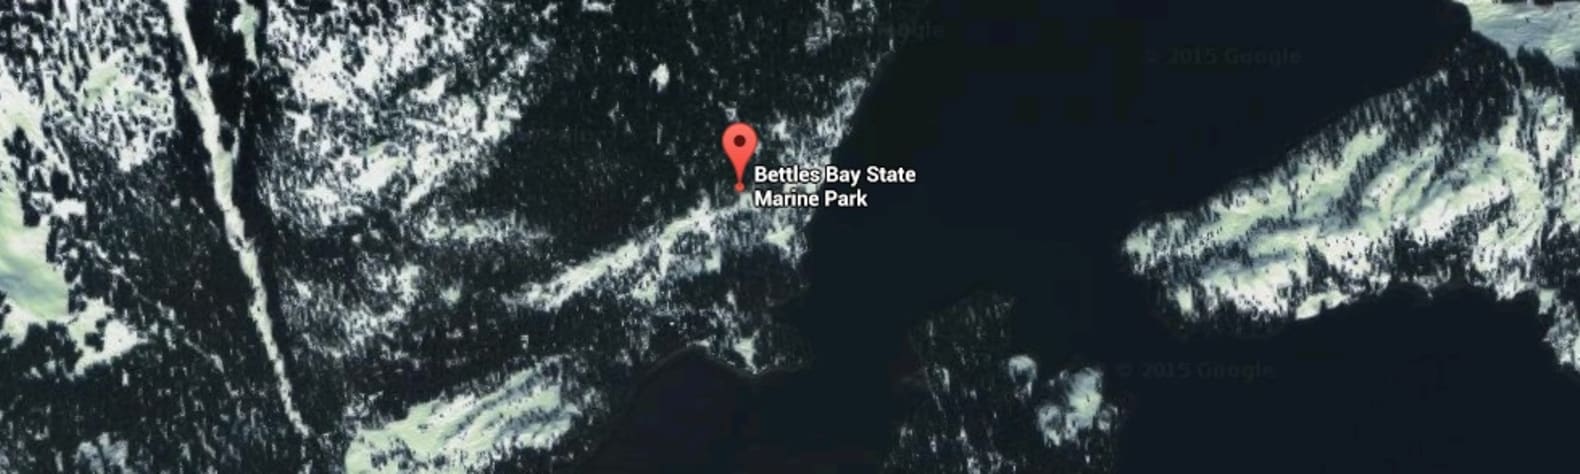 Bettles Bay State Marine Park